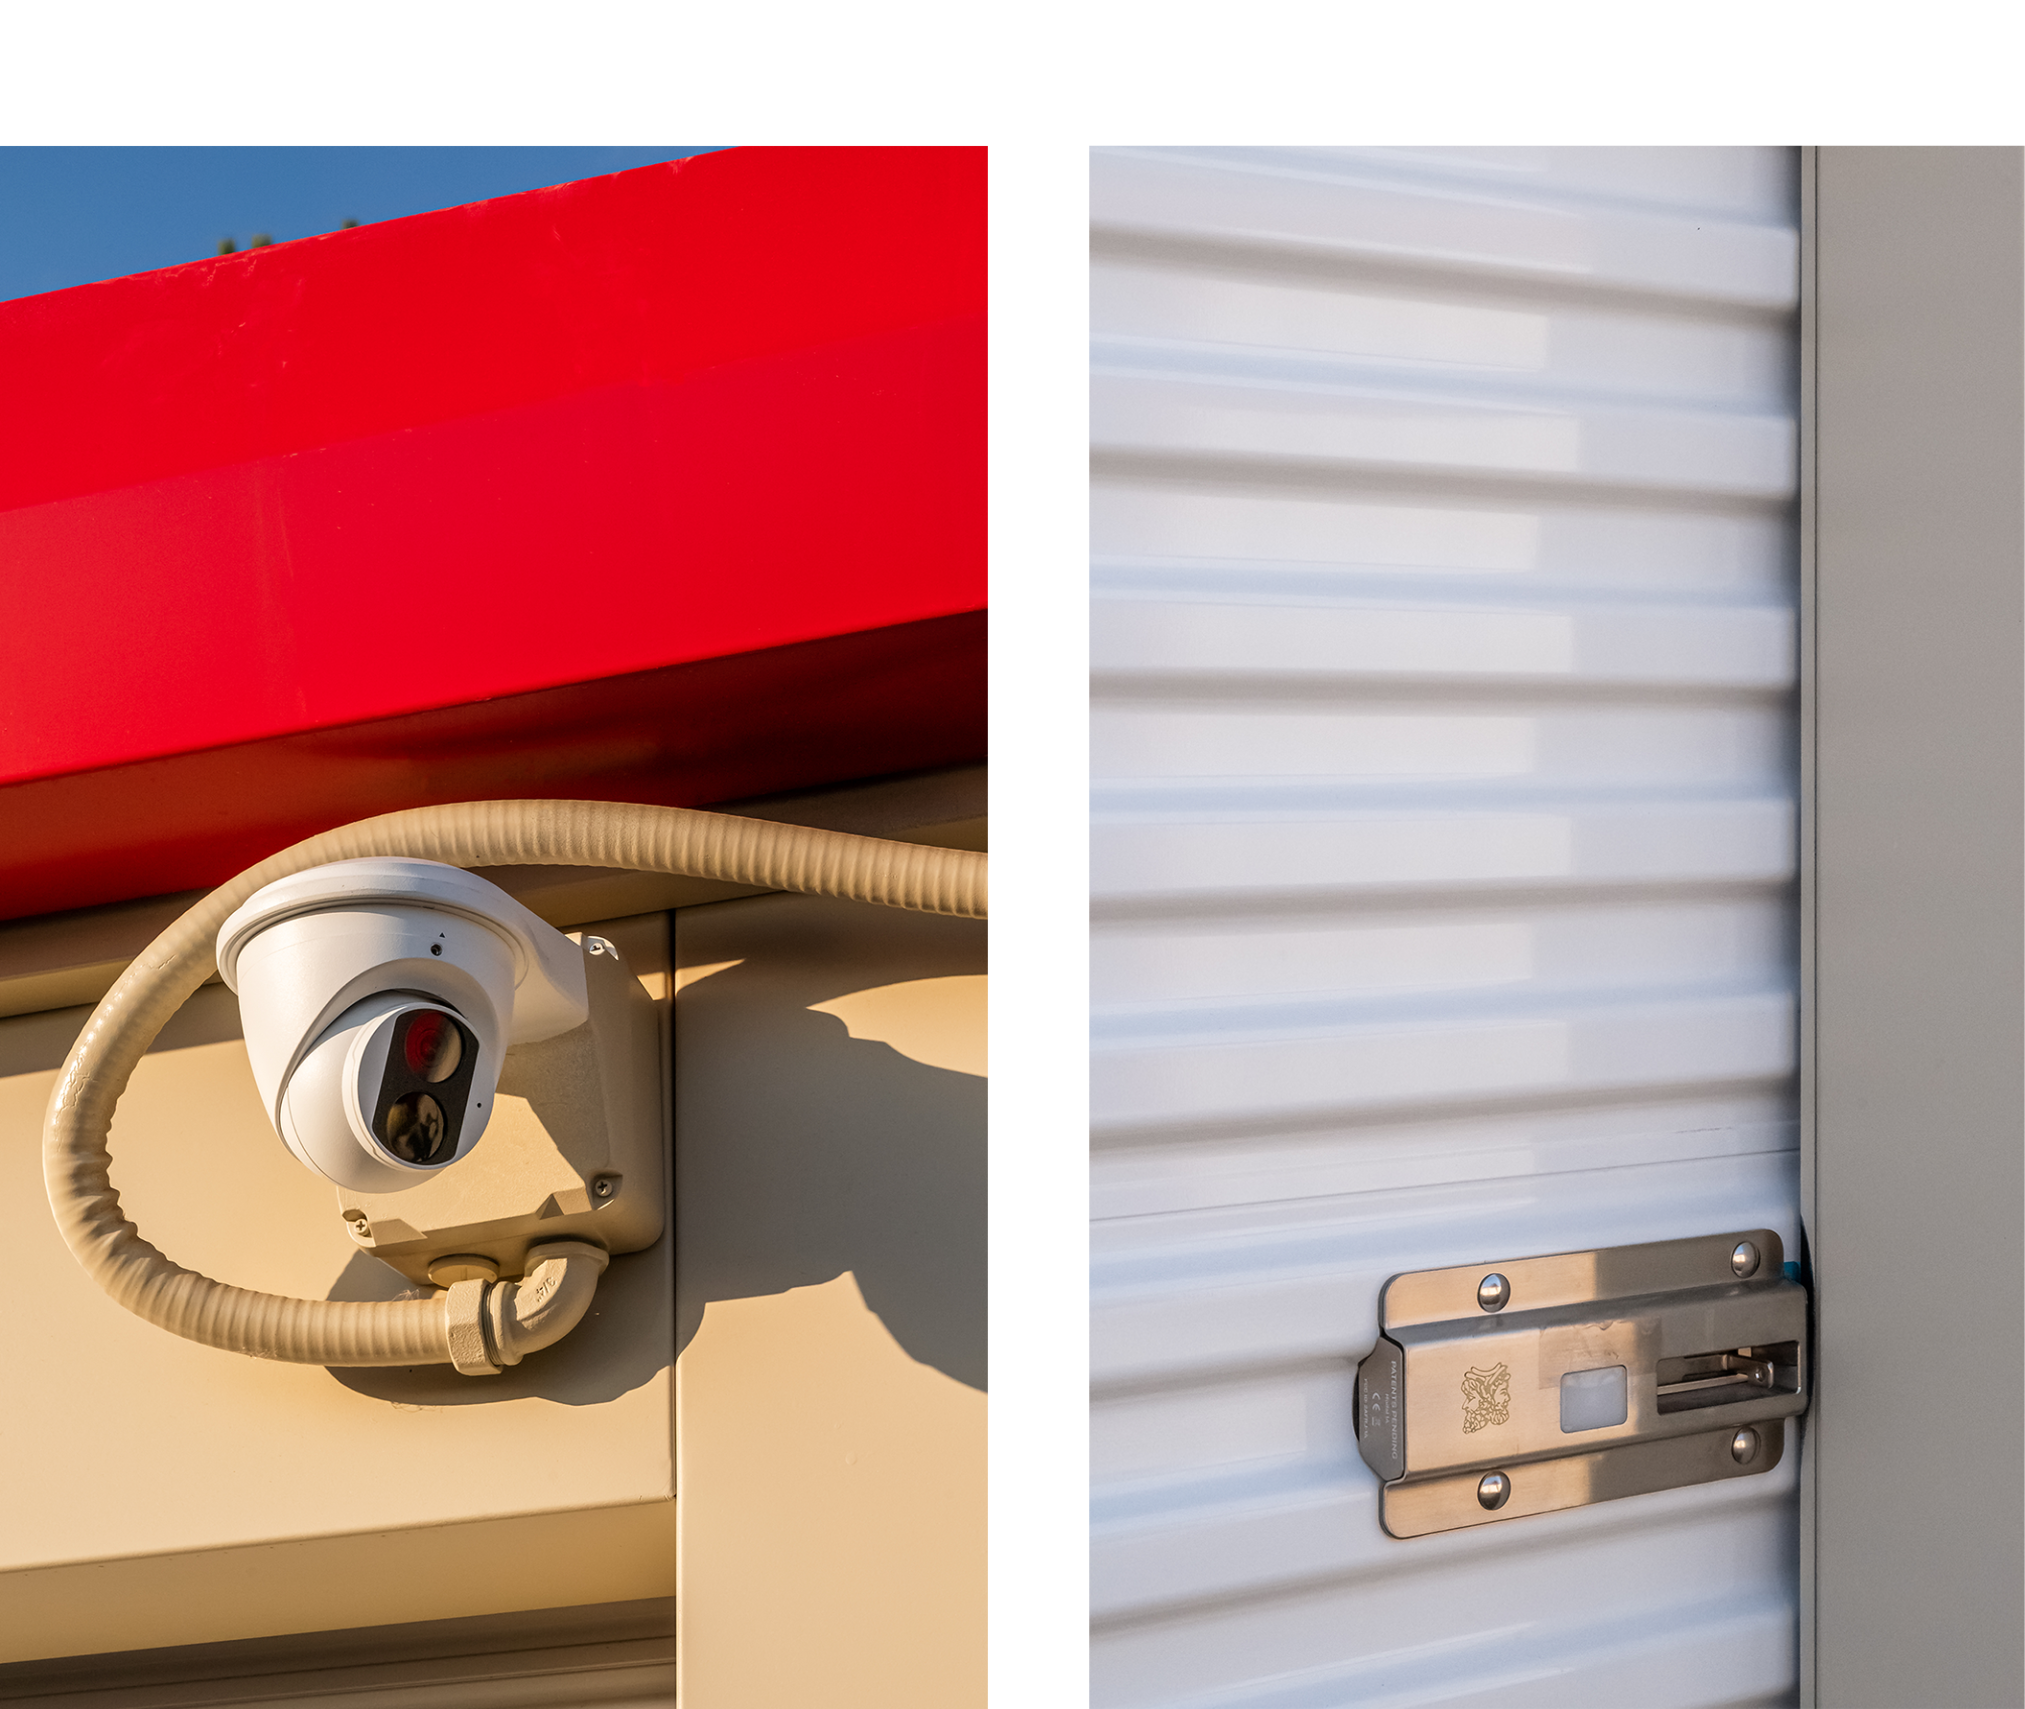 Modern Security Cameras & Locks